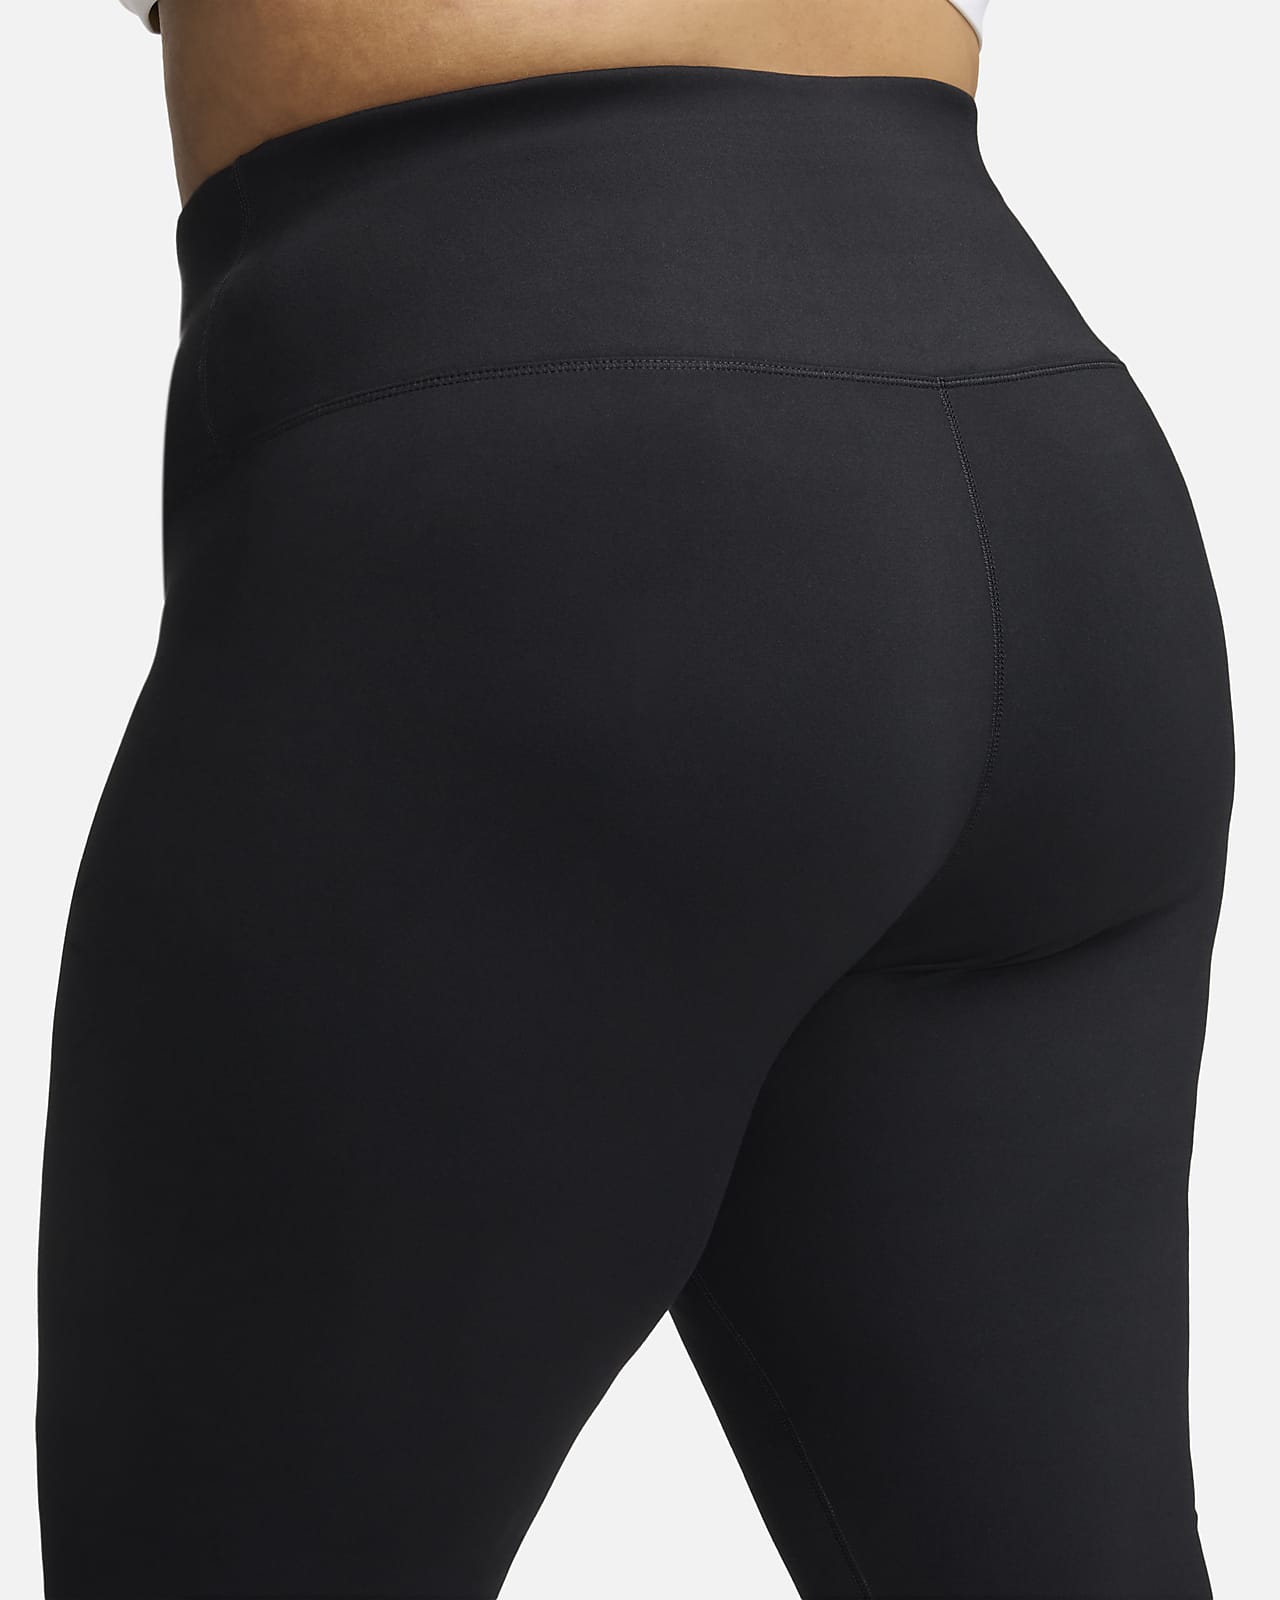 Nike Air Plus high rise leggings in black with calf logo